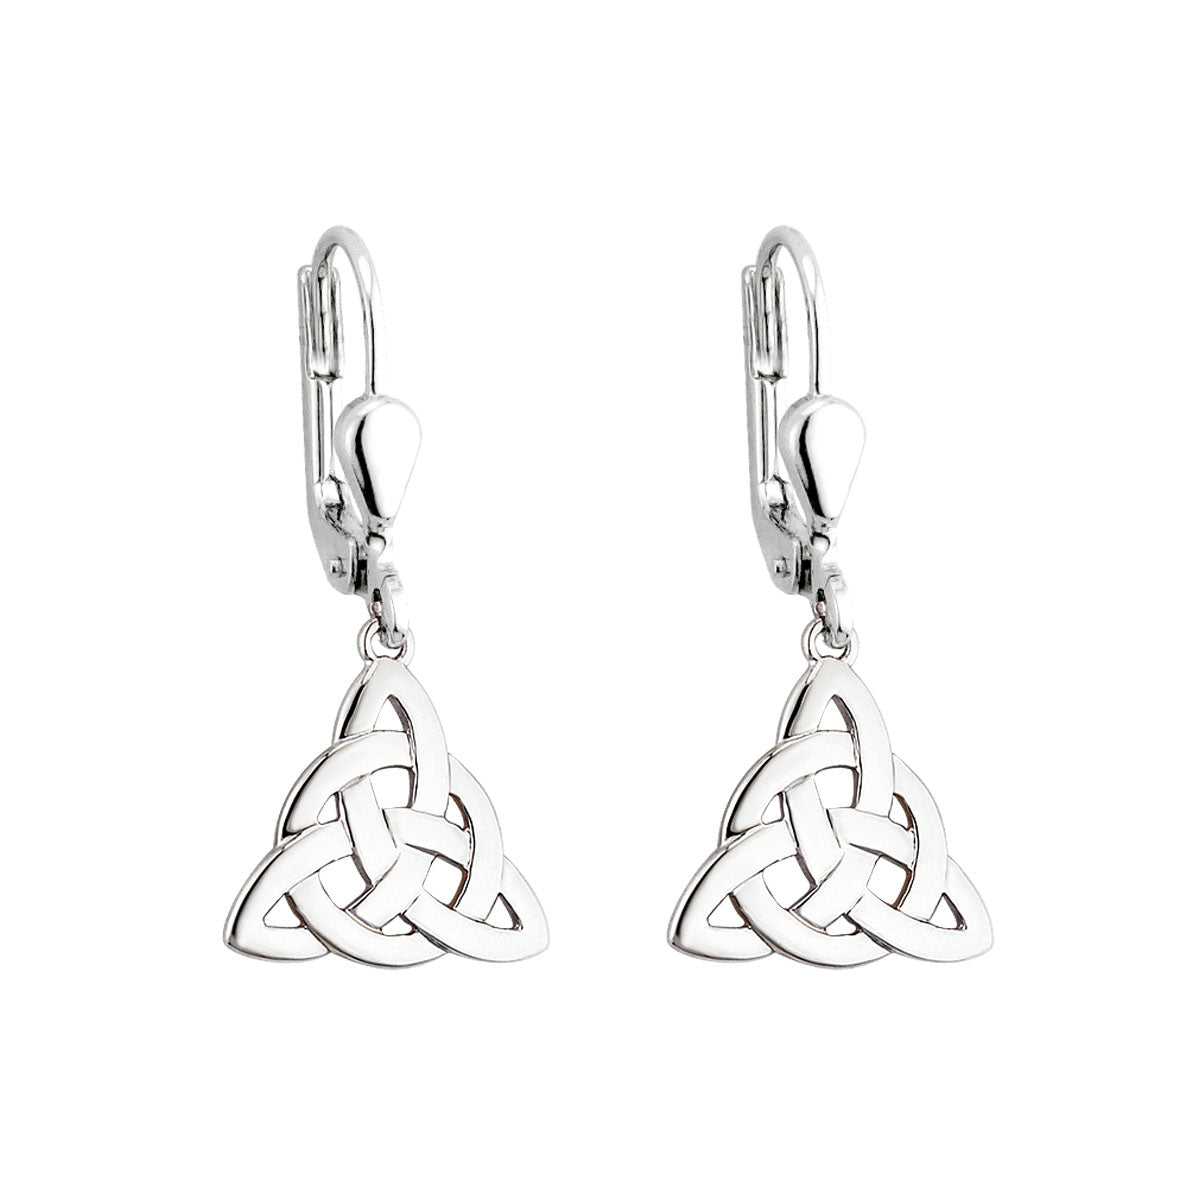 sterling silver celtic knot drop earrings s3694 from Solvar